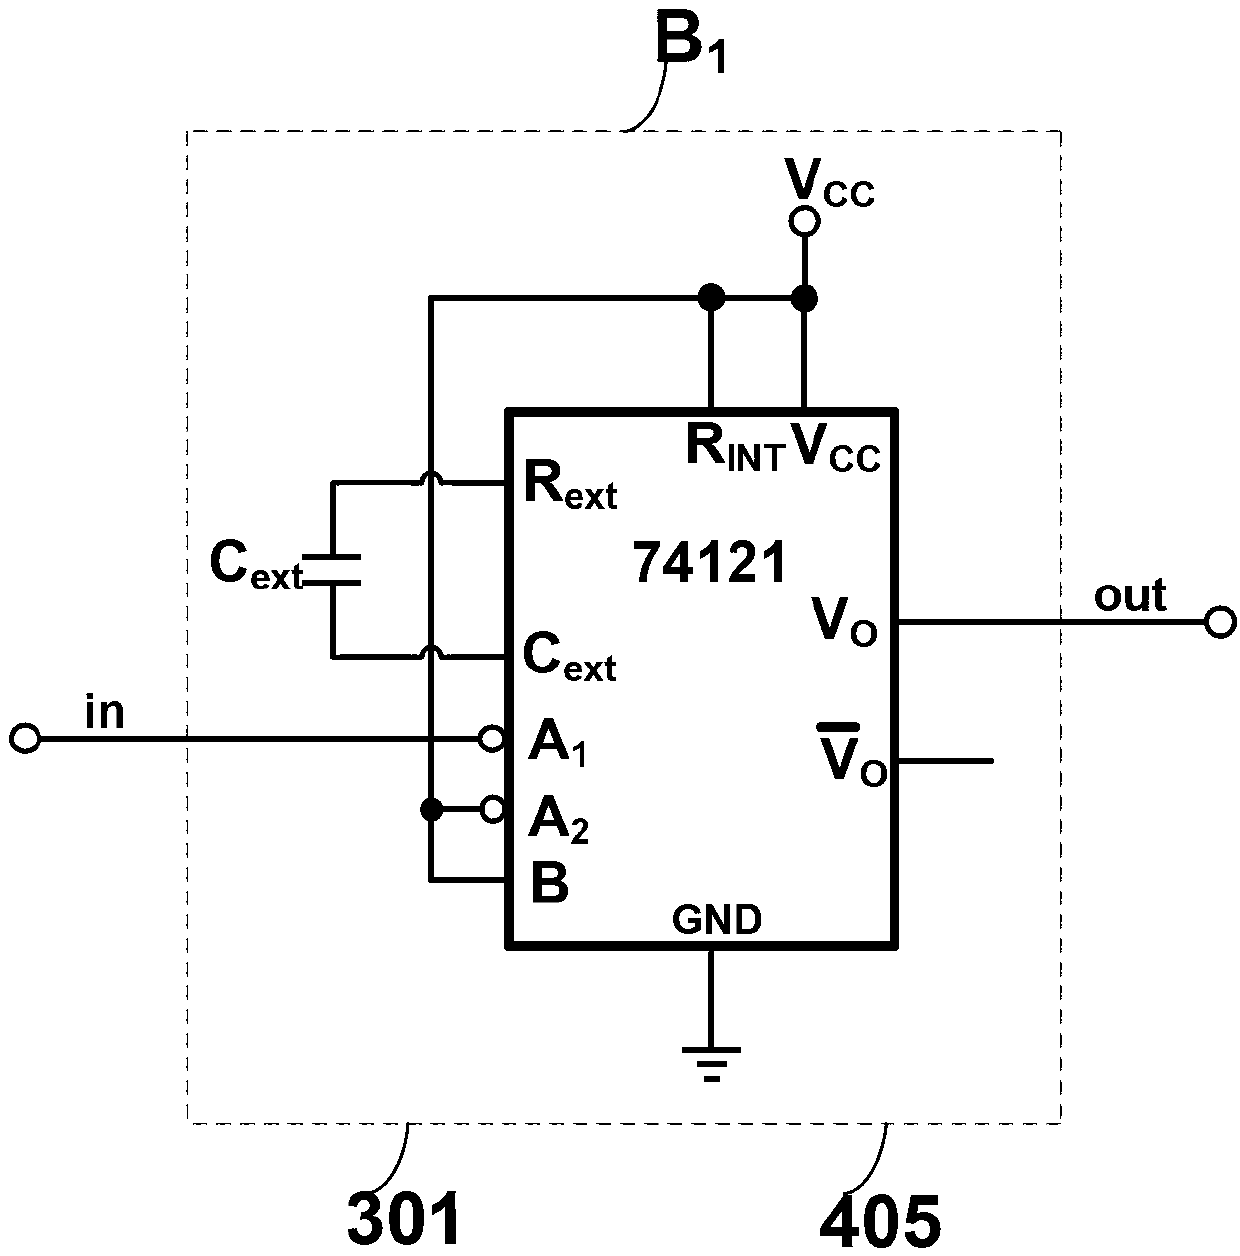 Quasi-resonance converter synchronous rectification circuit